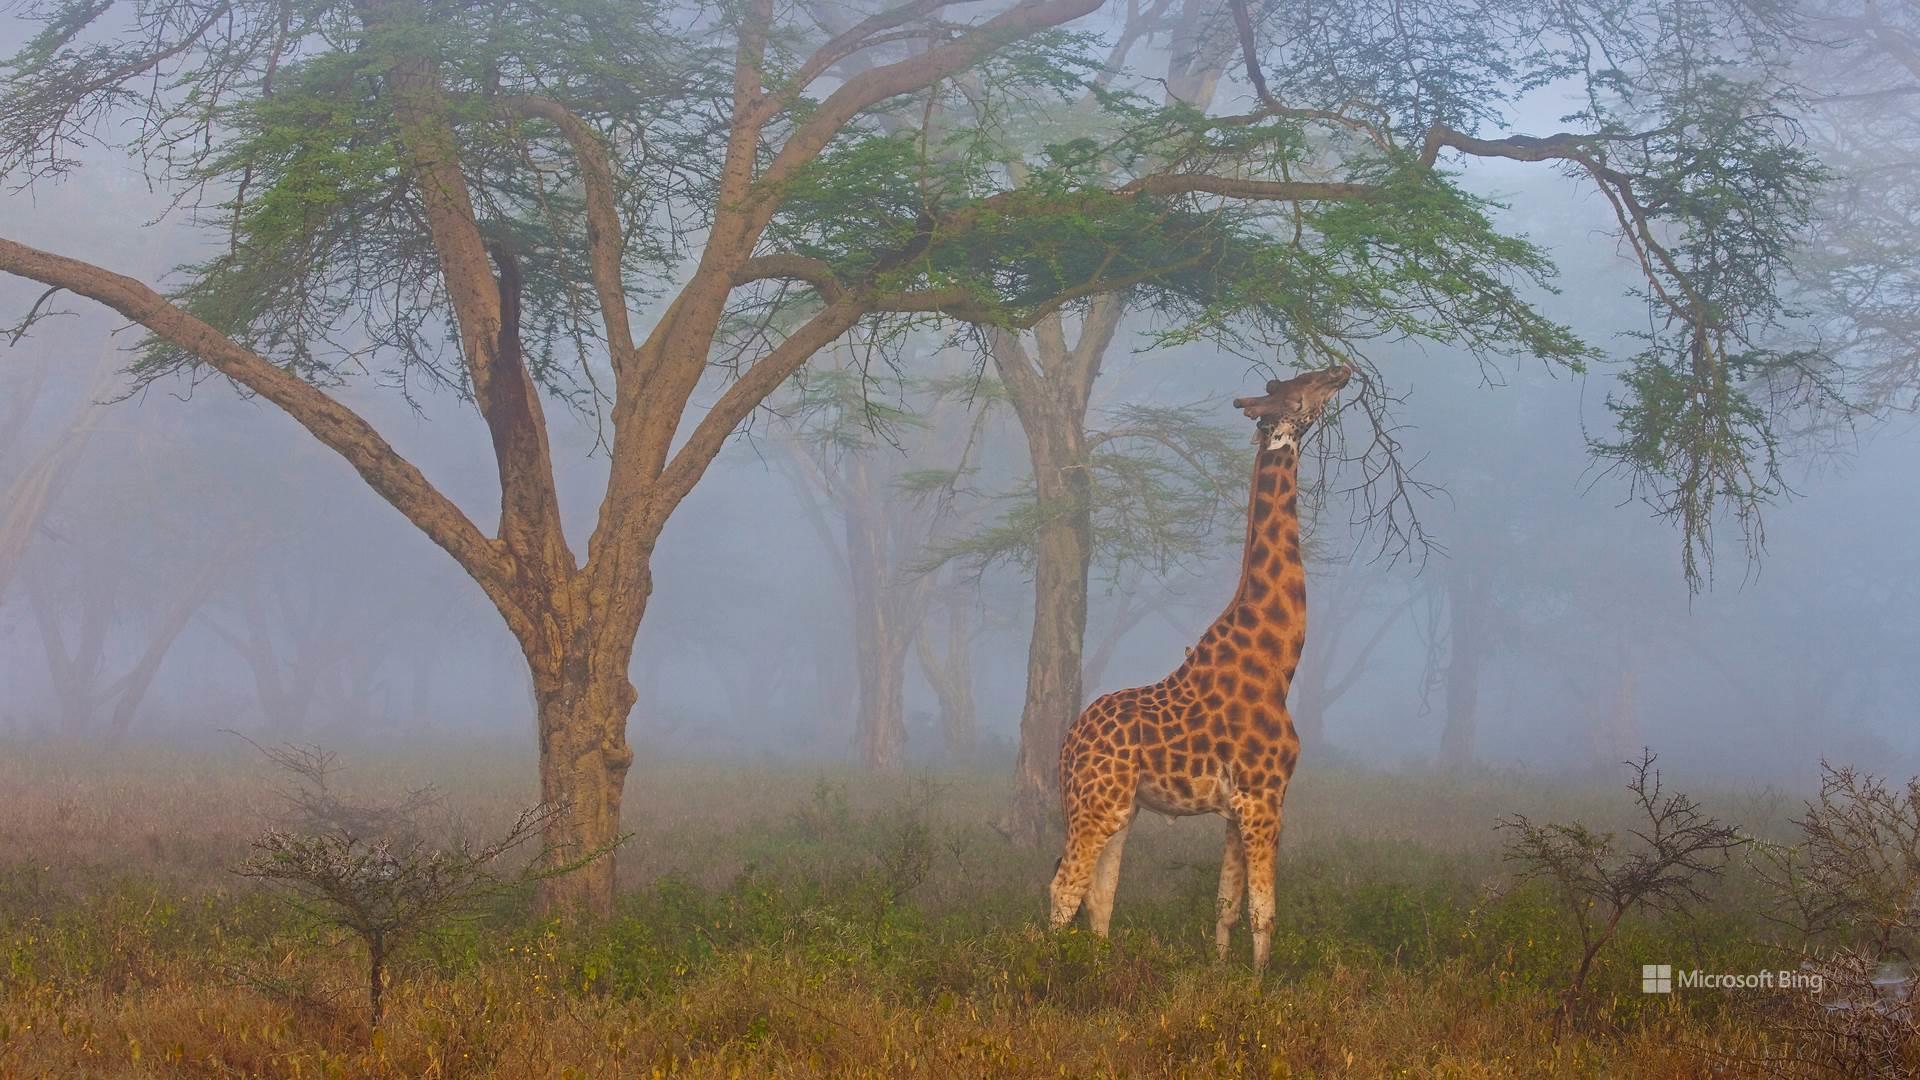 General 1920x1080 nature animals landscape Bing giraffes